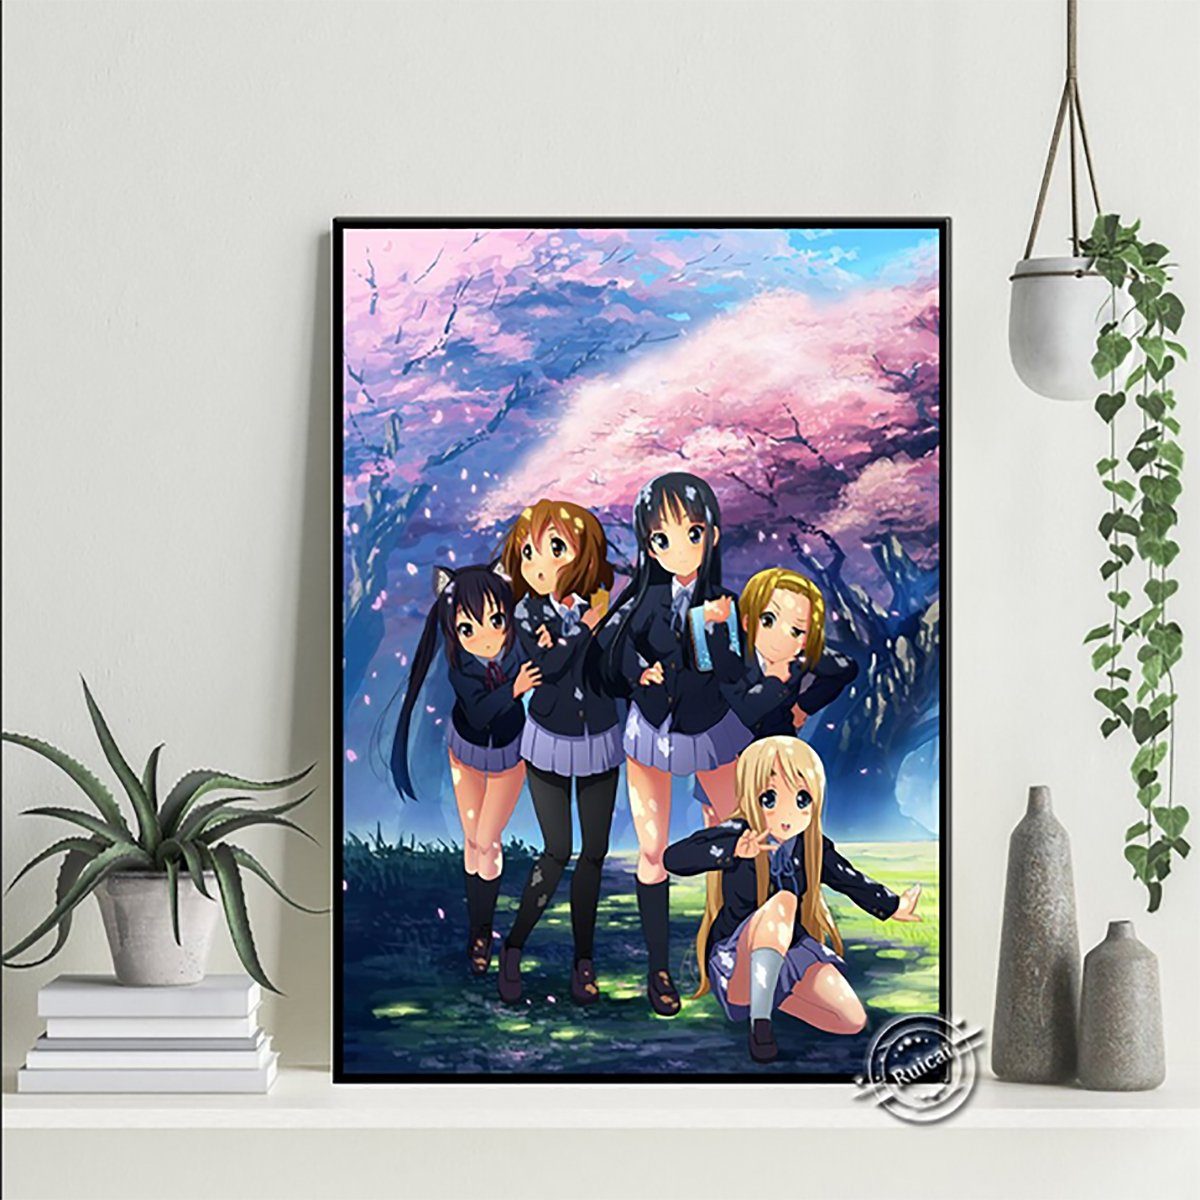 TPFLiving Kunstdruck (OHNE RAHMEN) Poster - Leinwand - Wandbild, K-ON - Kunstdruck aus der japanischen Anime Fernsehserie - (Yonkoma Manga - Leinwand Wohnzimmer, Leinwand Bilder, Kunstdruck), Leinwand bunt - Größe 13x18cm